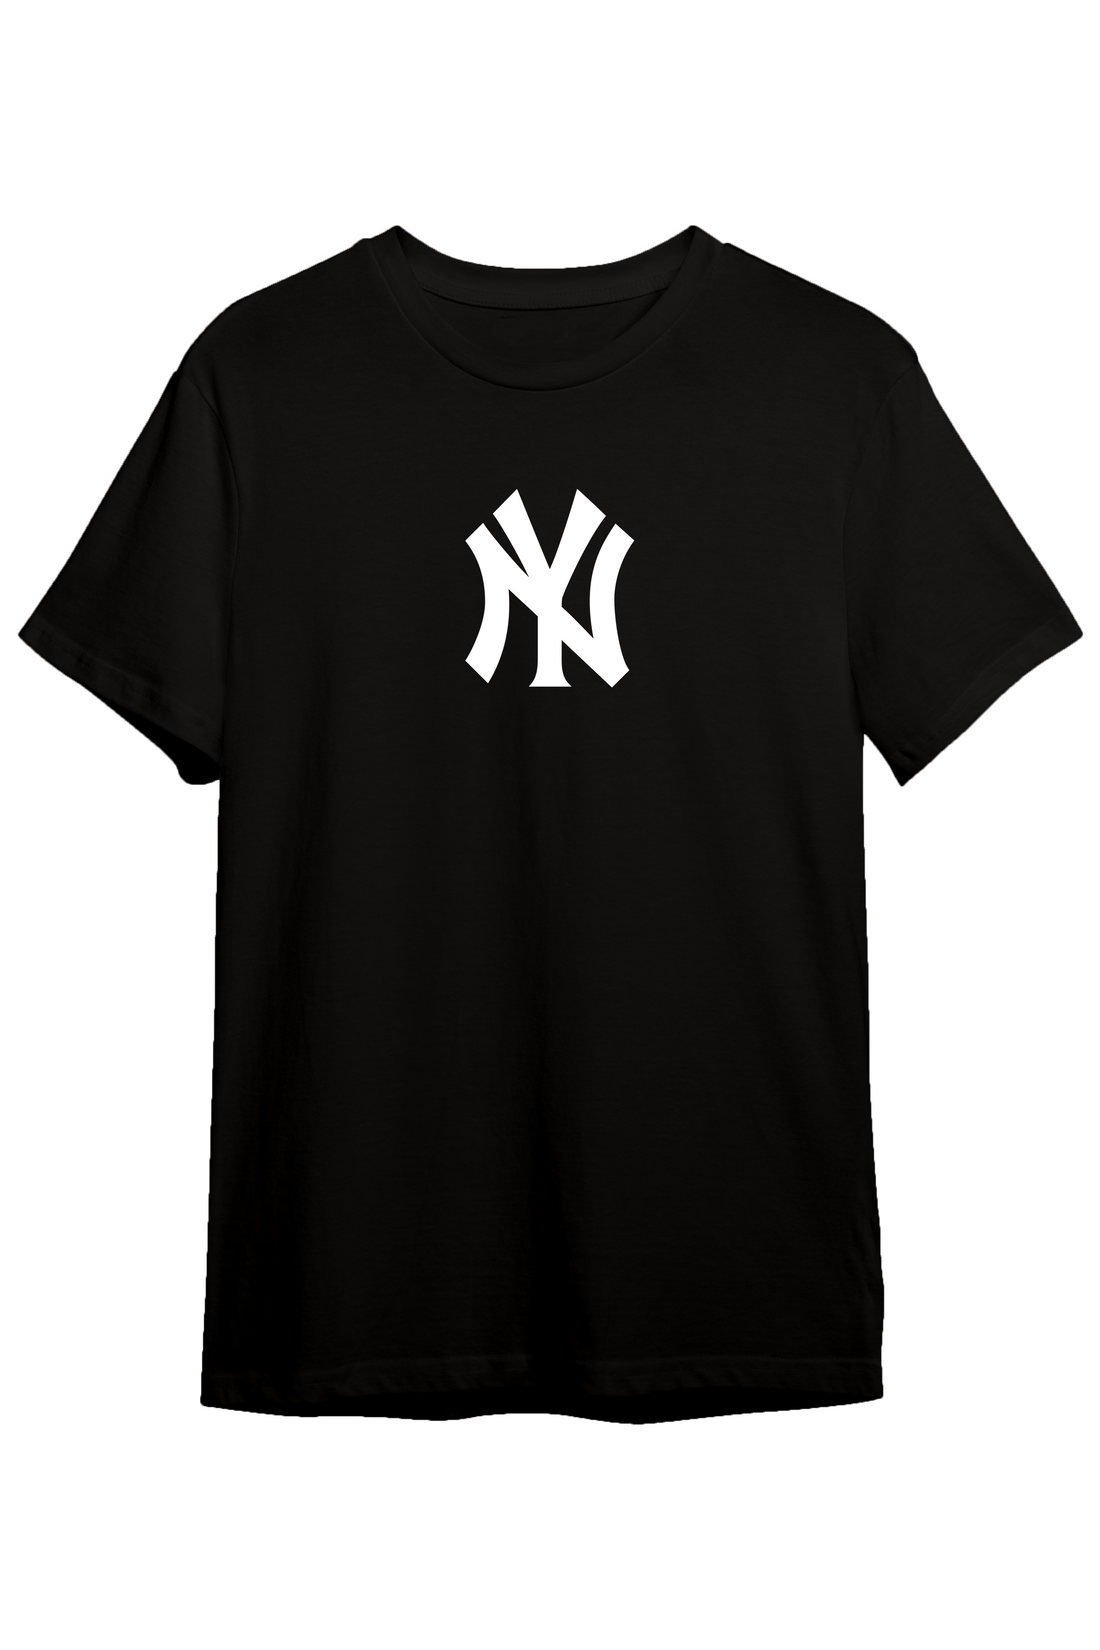 Yankees - Regular Tshirt